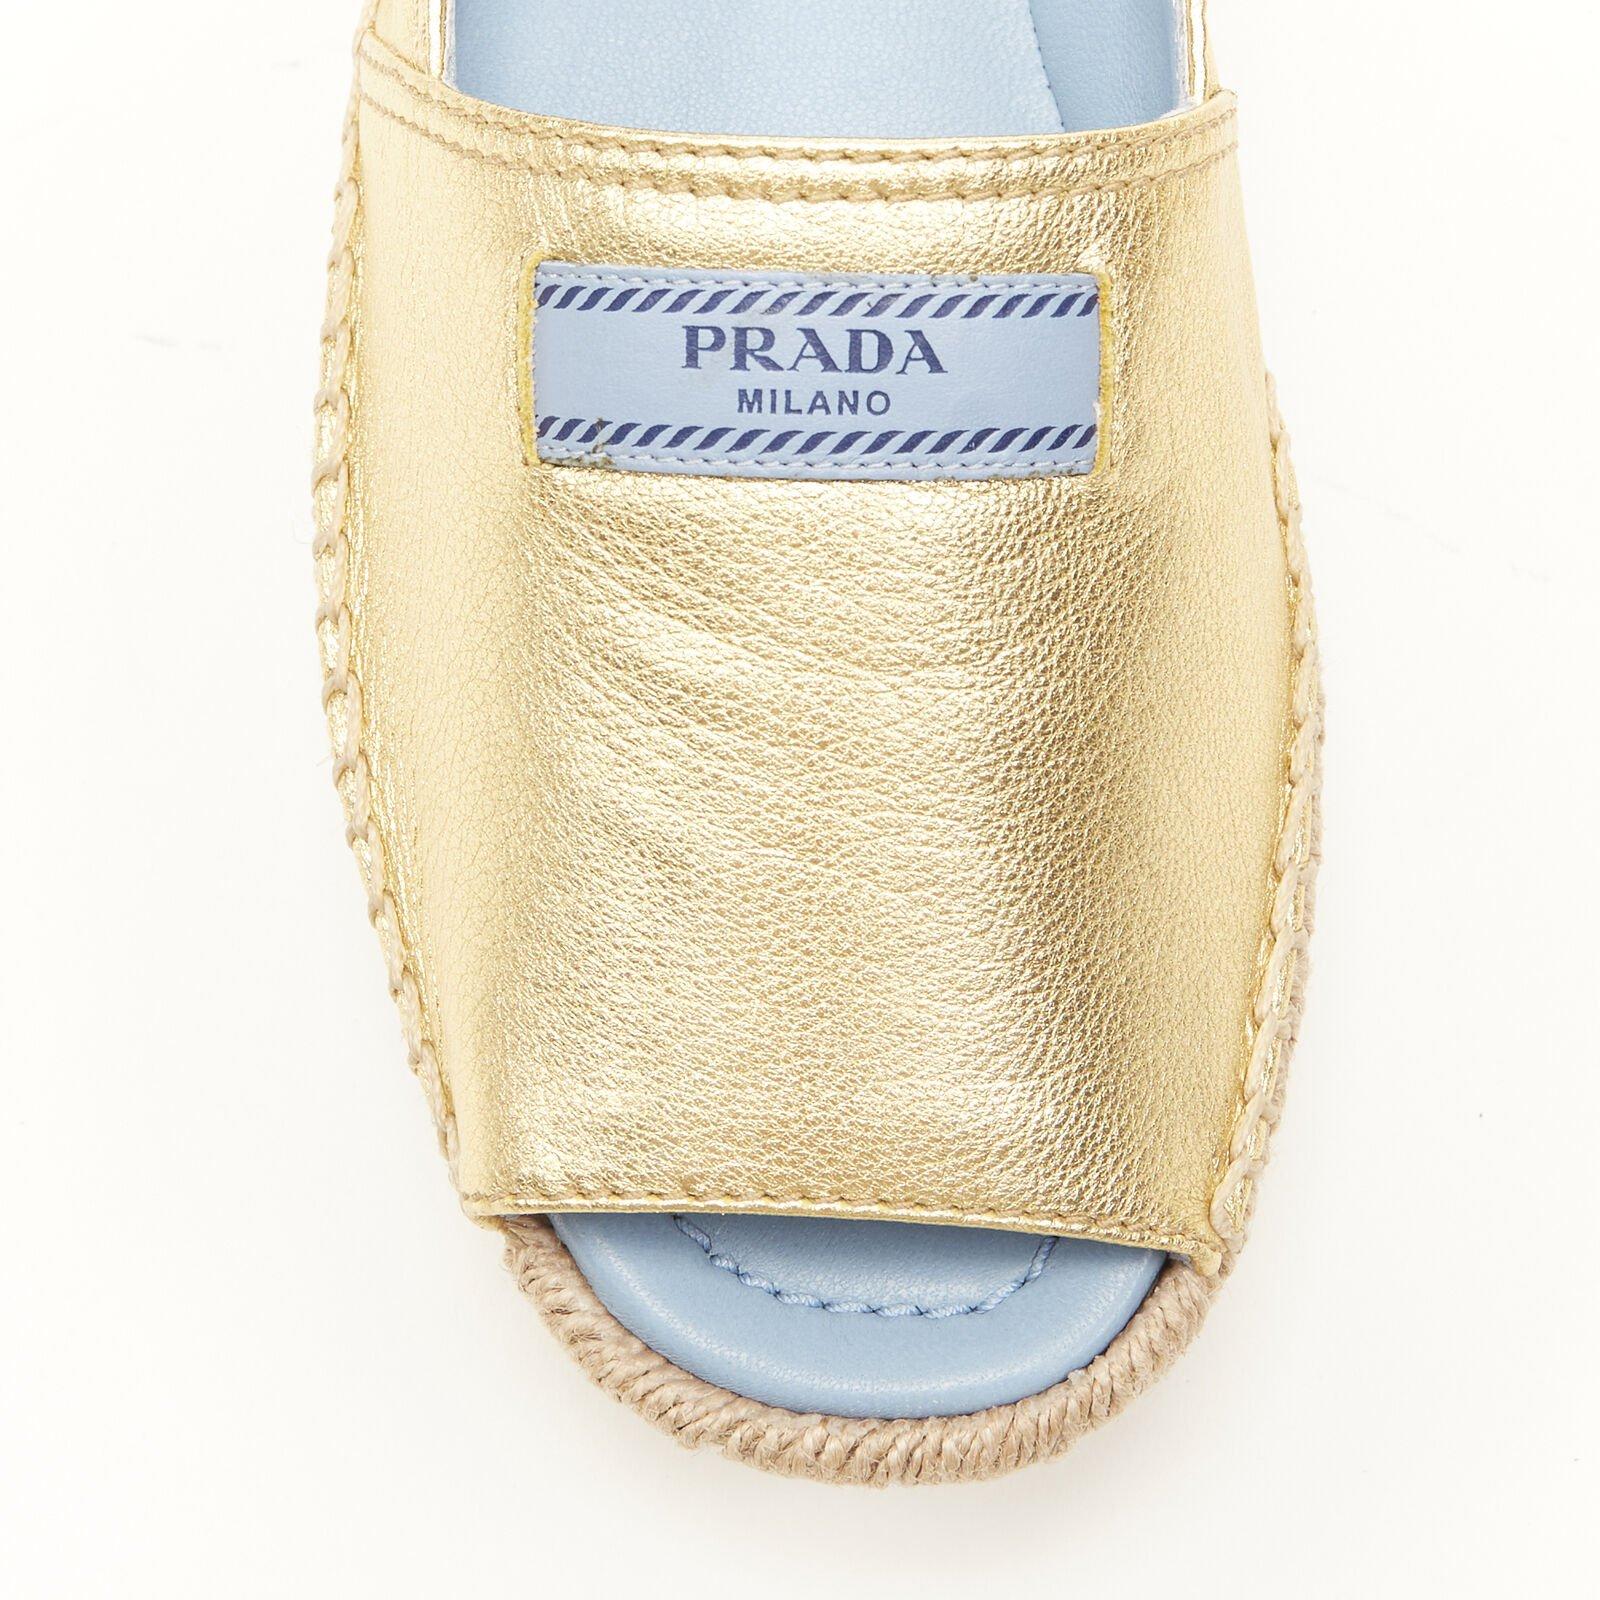 PRADA metallic gold leather logo peep toe jute platform espadrille shoe EU38 For Sale 4